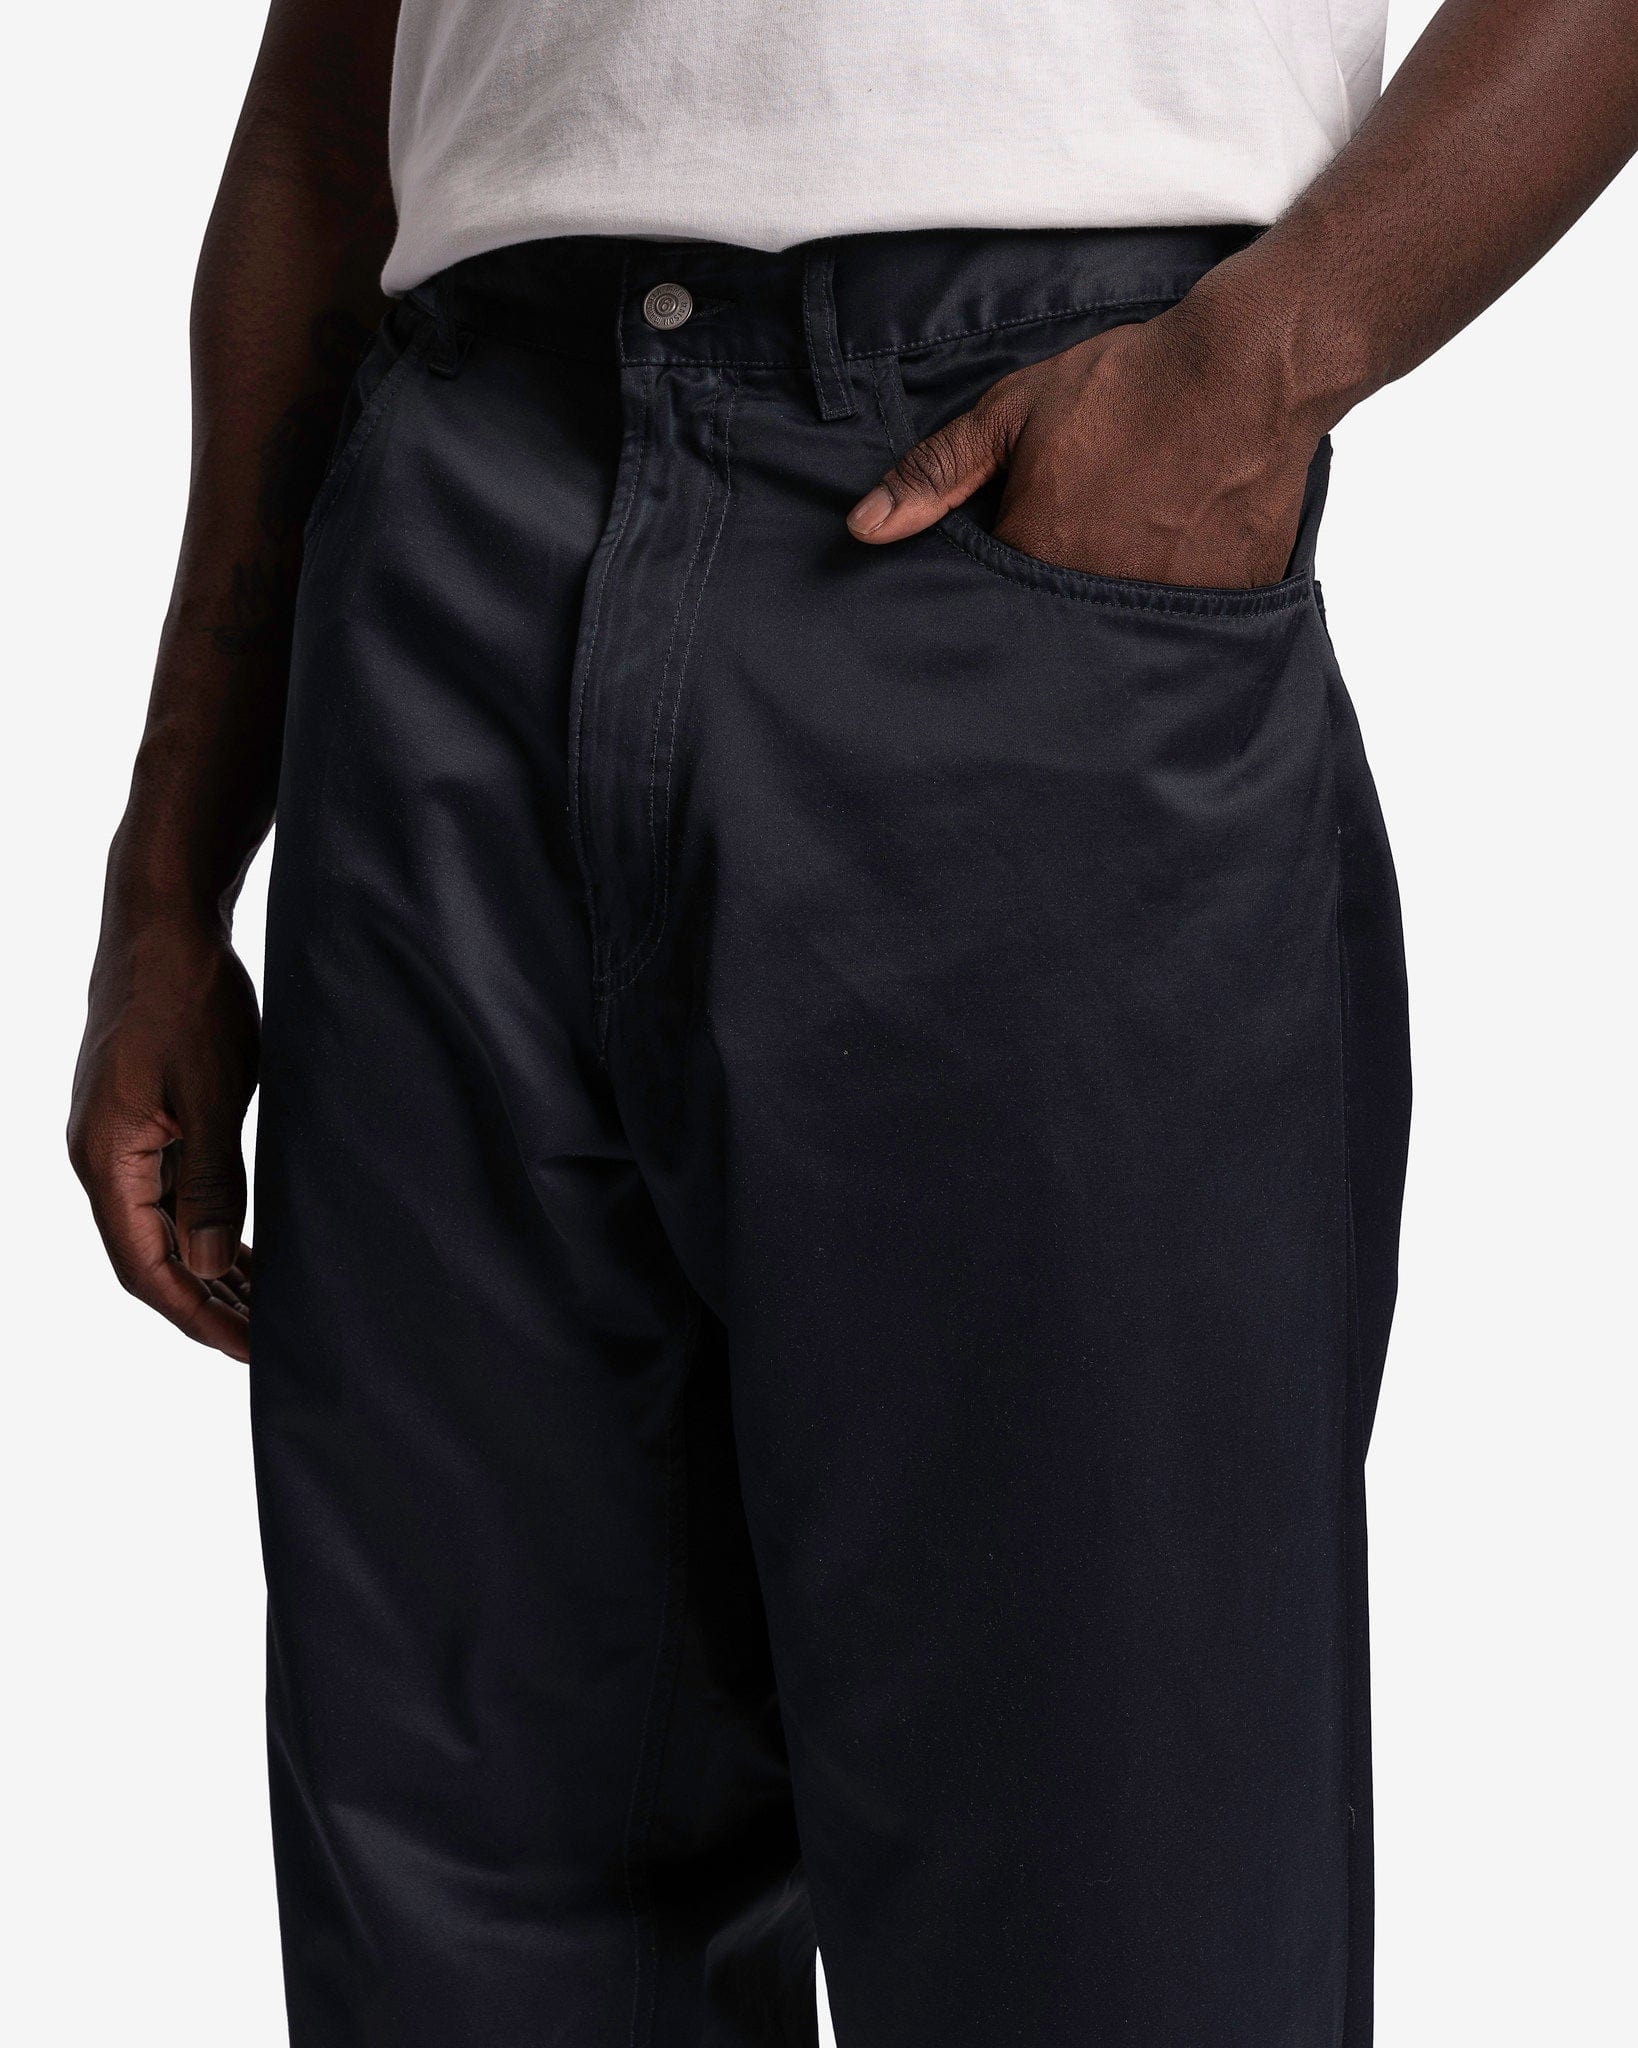 MM6 Maison Margiela mens pants Oversized 5-Pockets Pants in Black